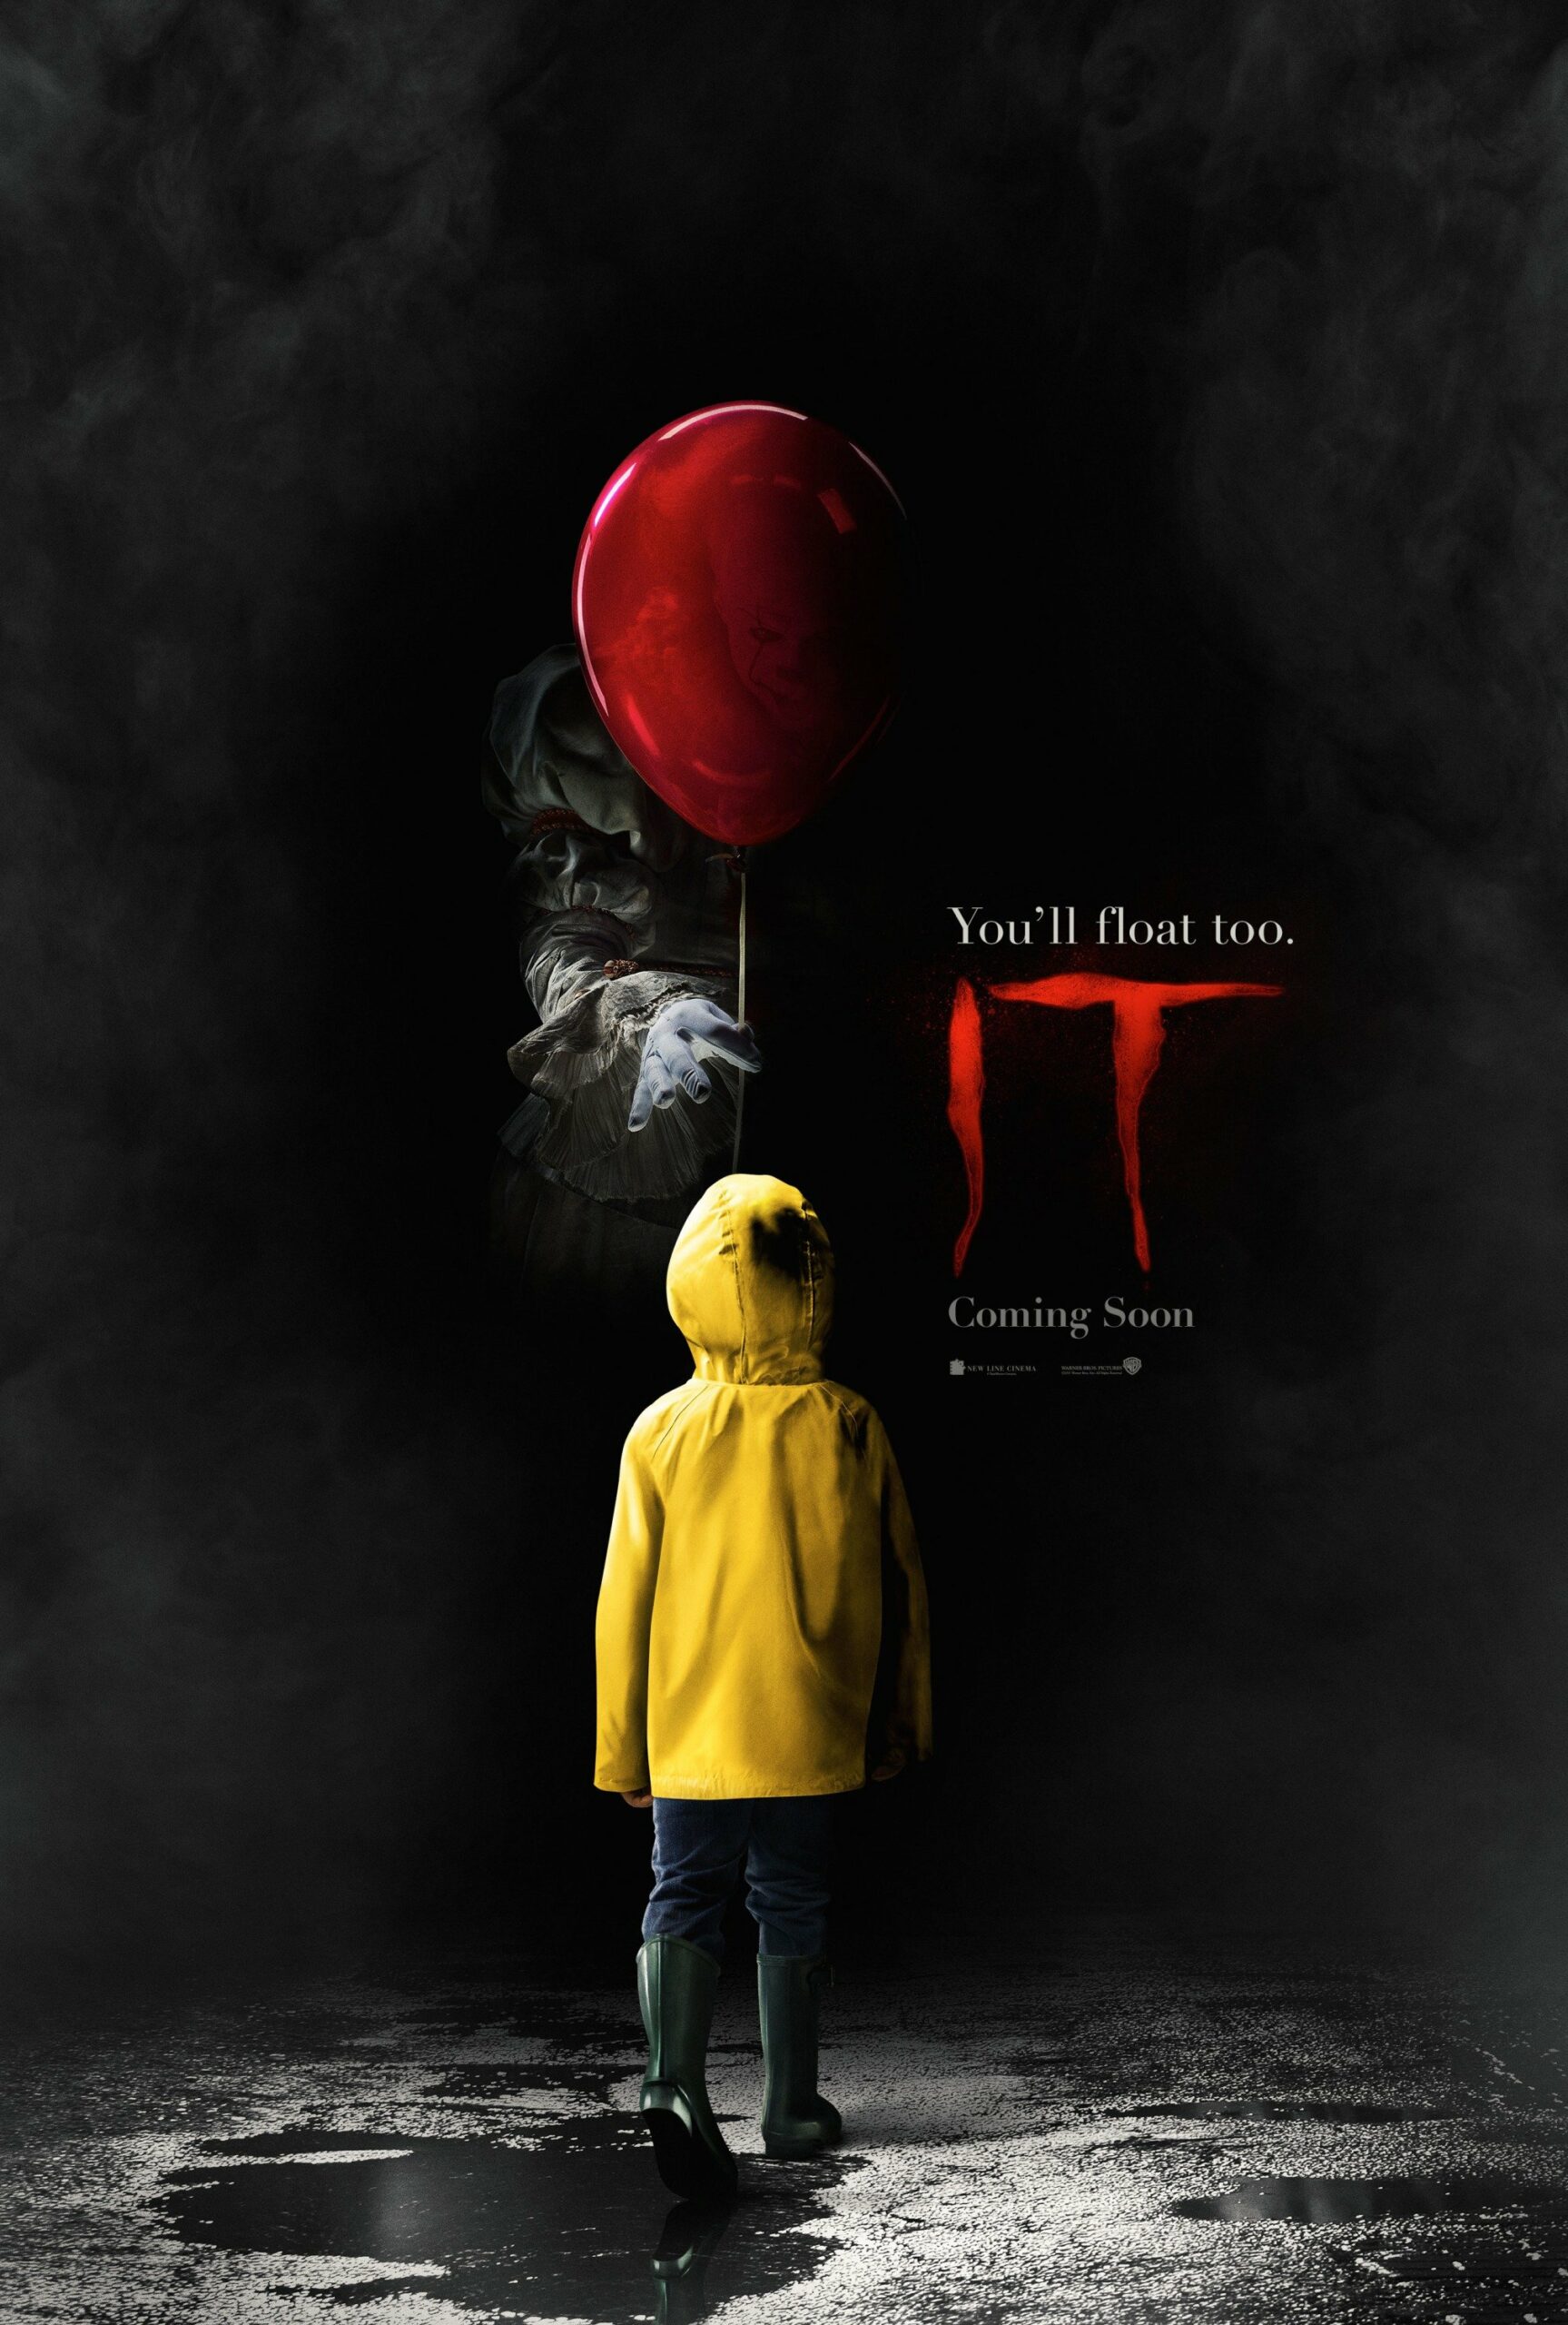 Poster teaser de Ça (It en VO) avec la tagline : "You'll float too."